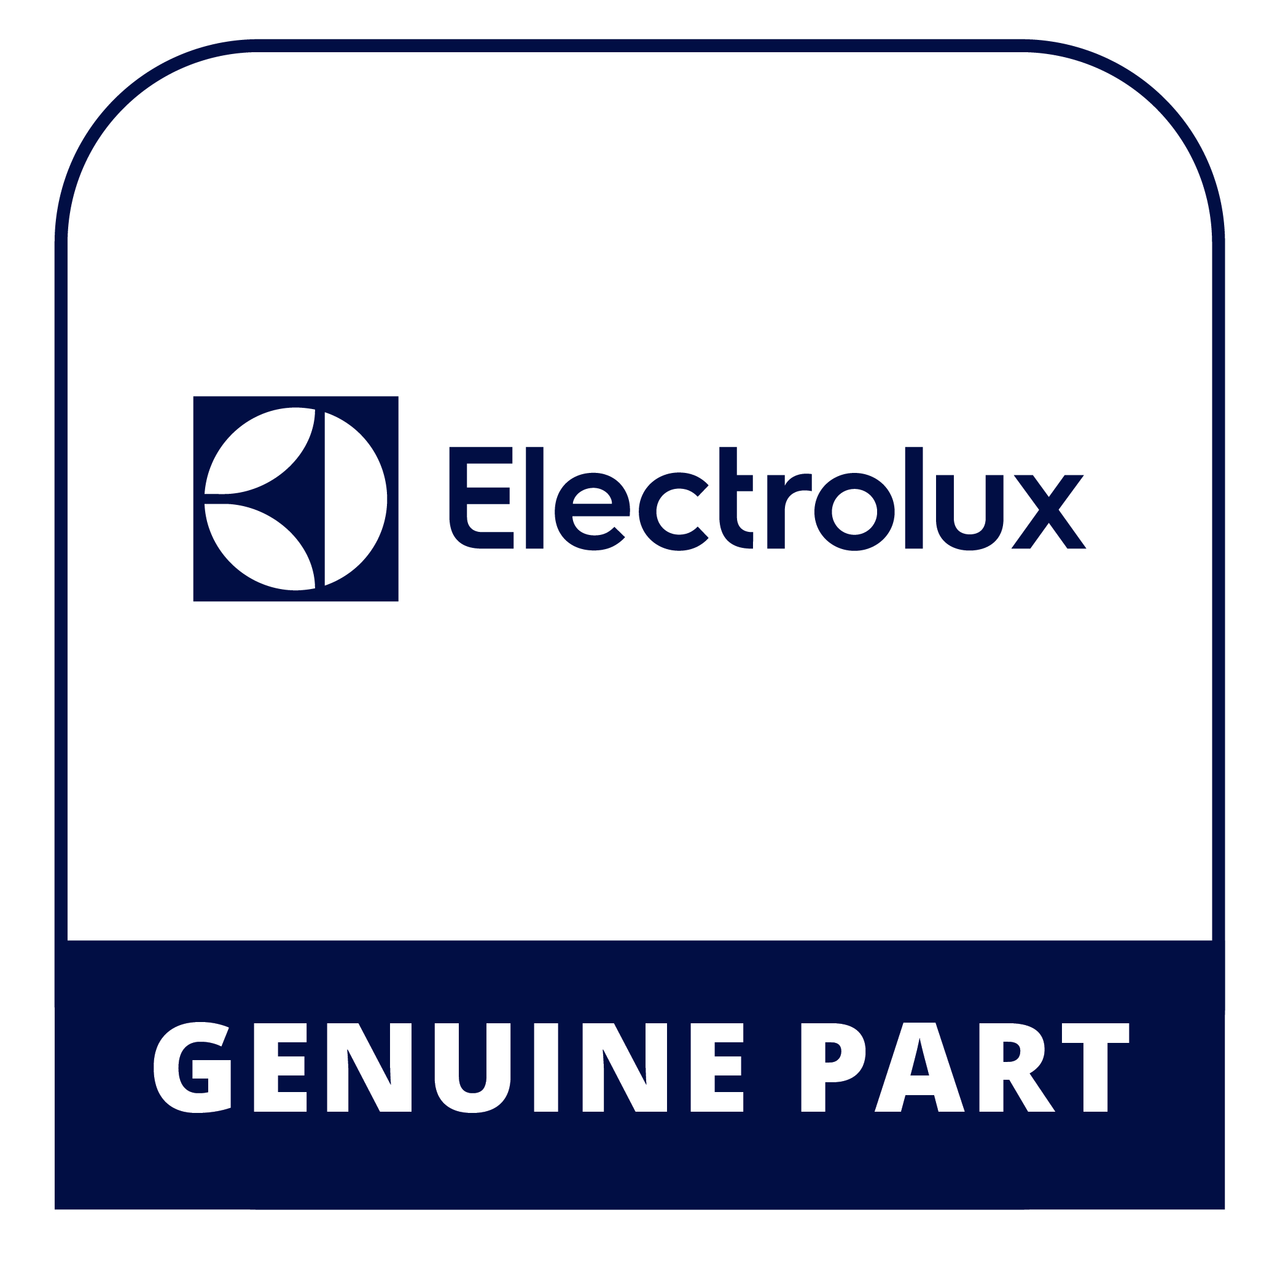 Frigidaire - Electrolux 318291505 Plate - Genuine Electrolux Part